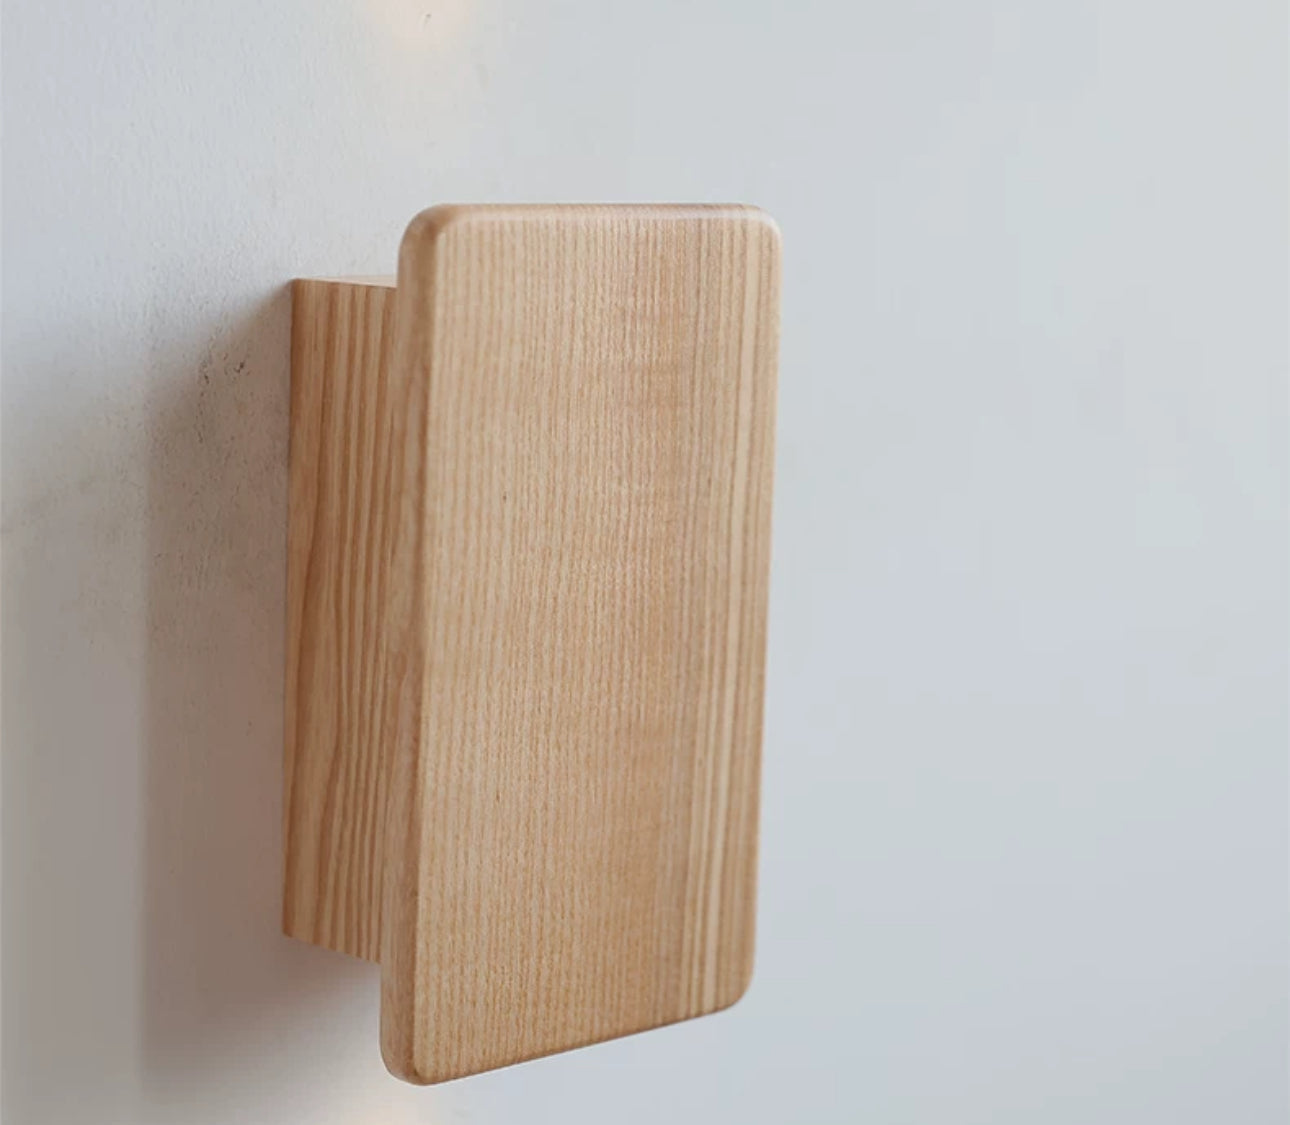 Japandi Design 20x12cm Wood Cool 4000k Led Lighting Intelligent Control - Minimalist Wall Lamps